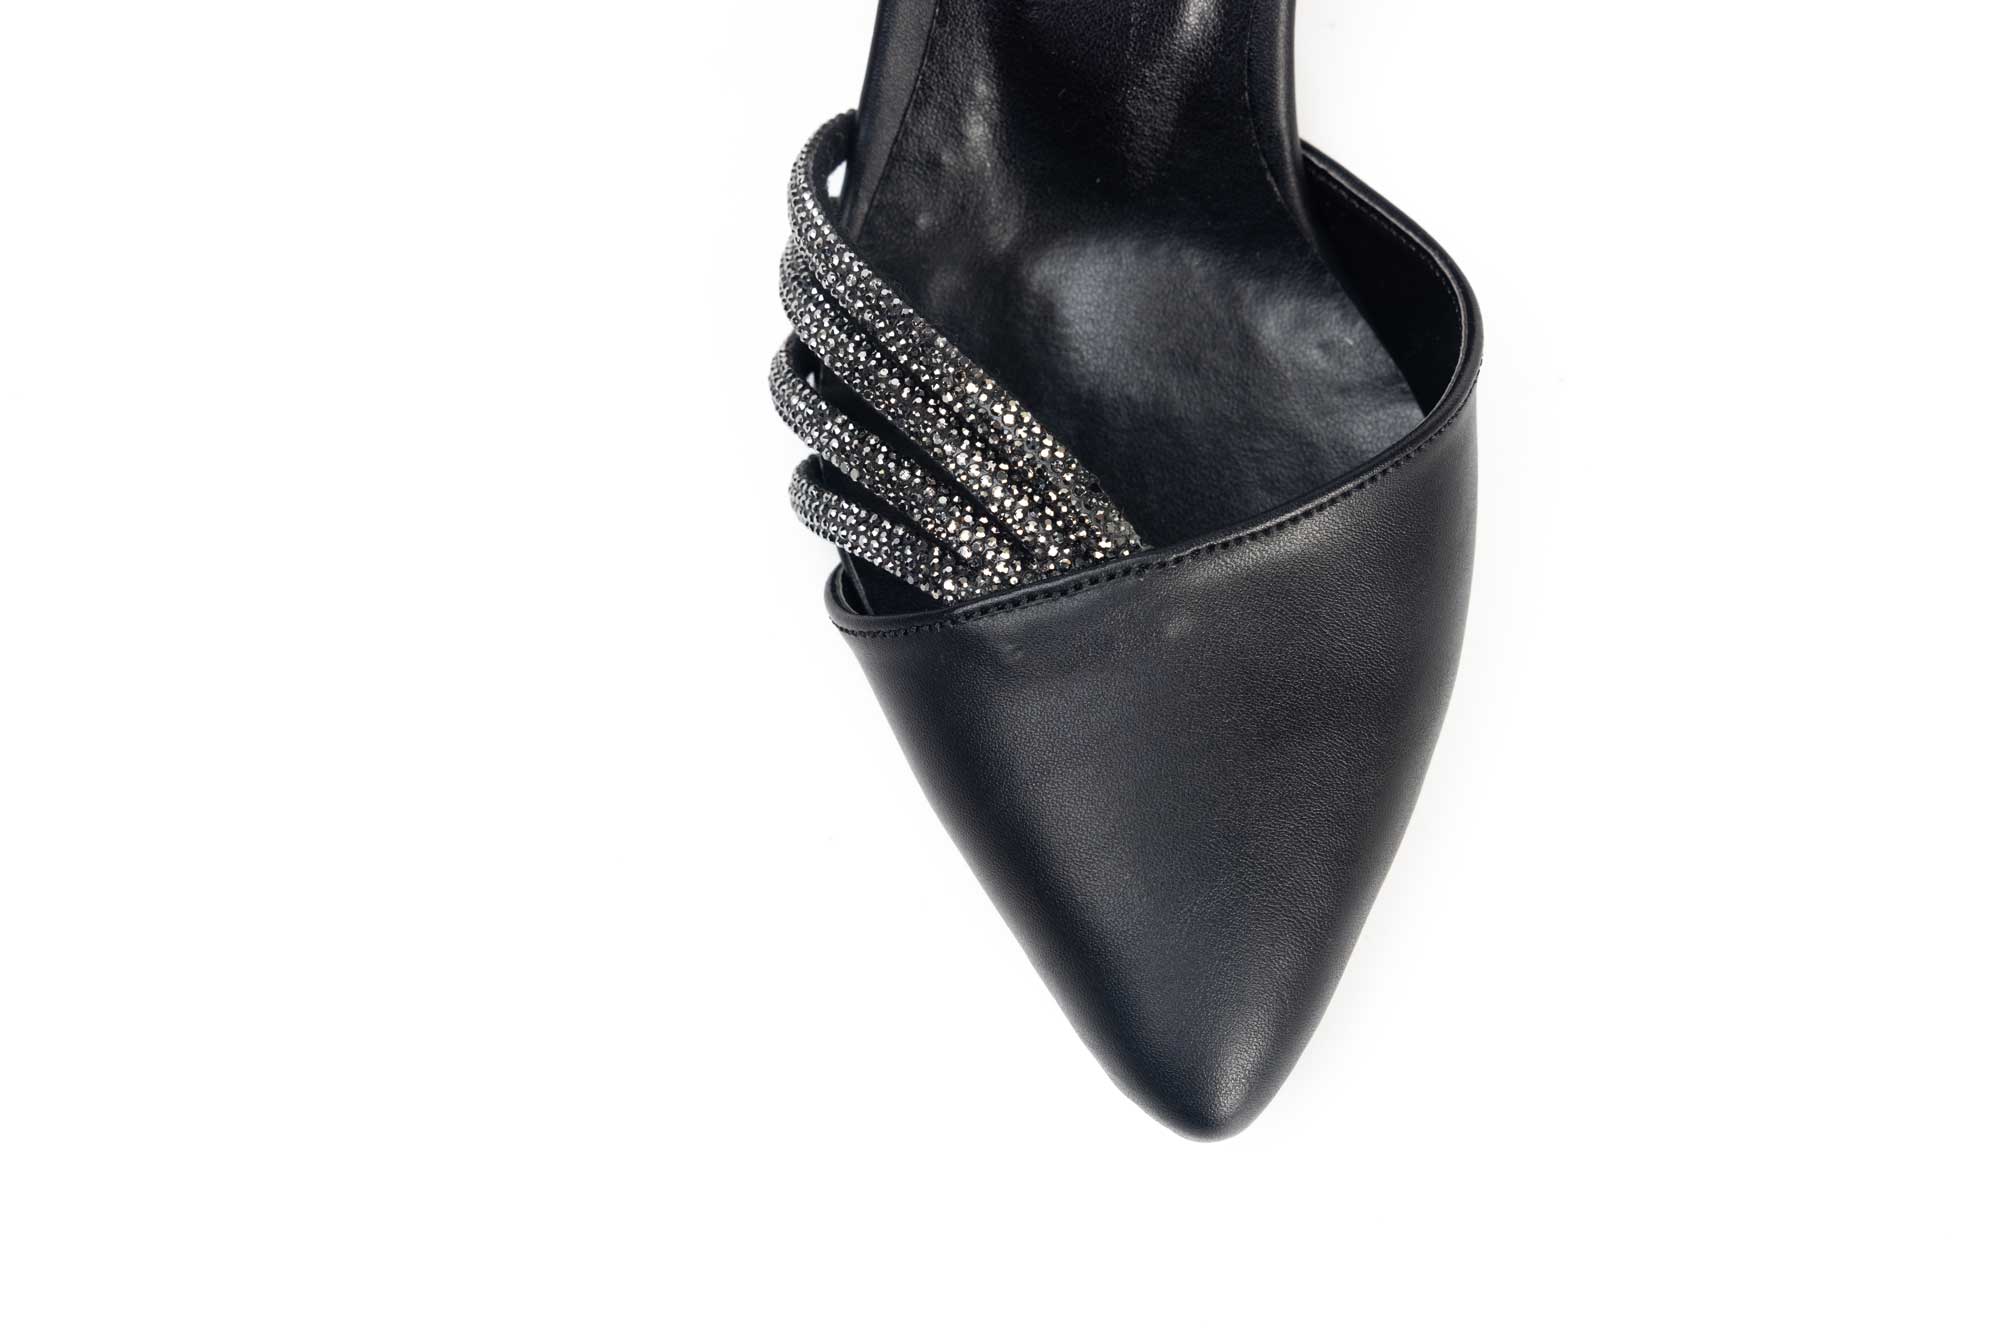 Pantofi dama decupati din piele eco 17 negru box